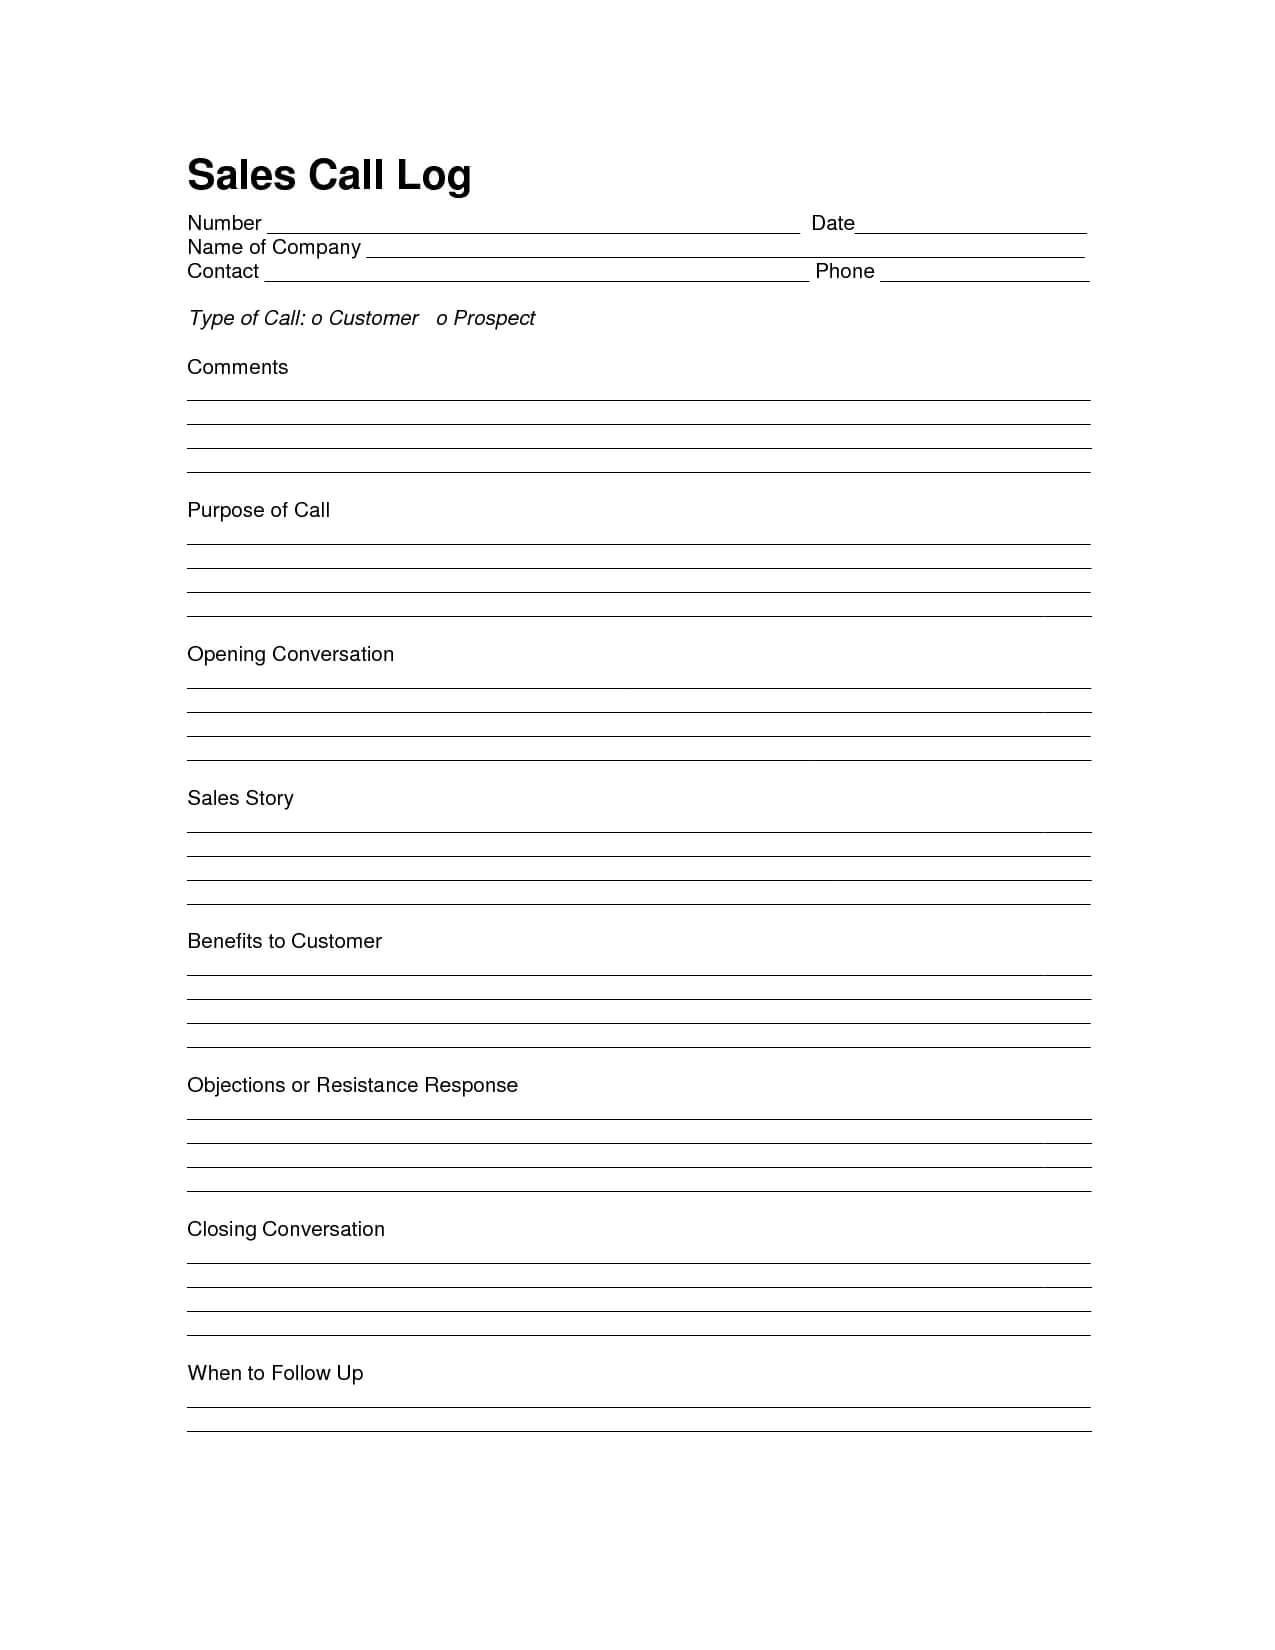 Sales Log Sheet Template | Sales Call Log Template | Sales Pertaining To Sales Call Report Template